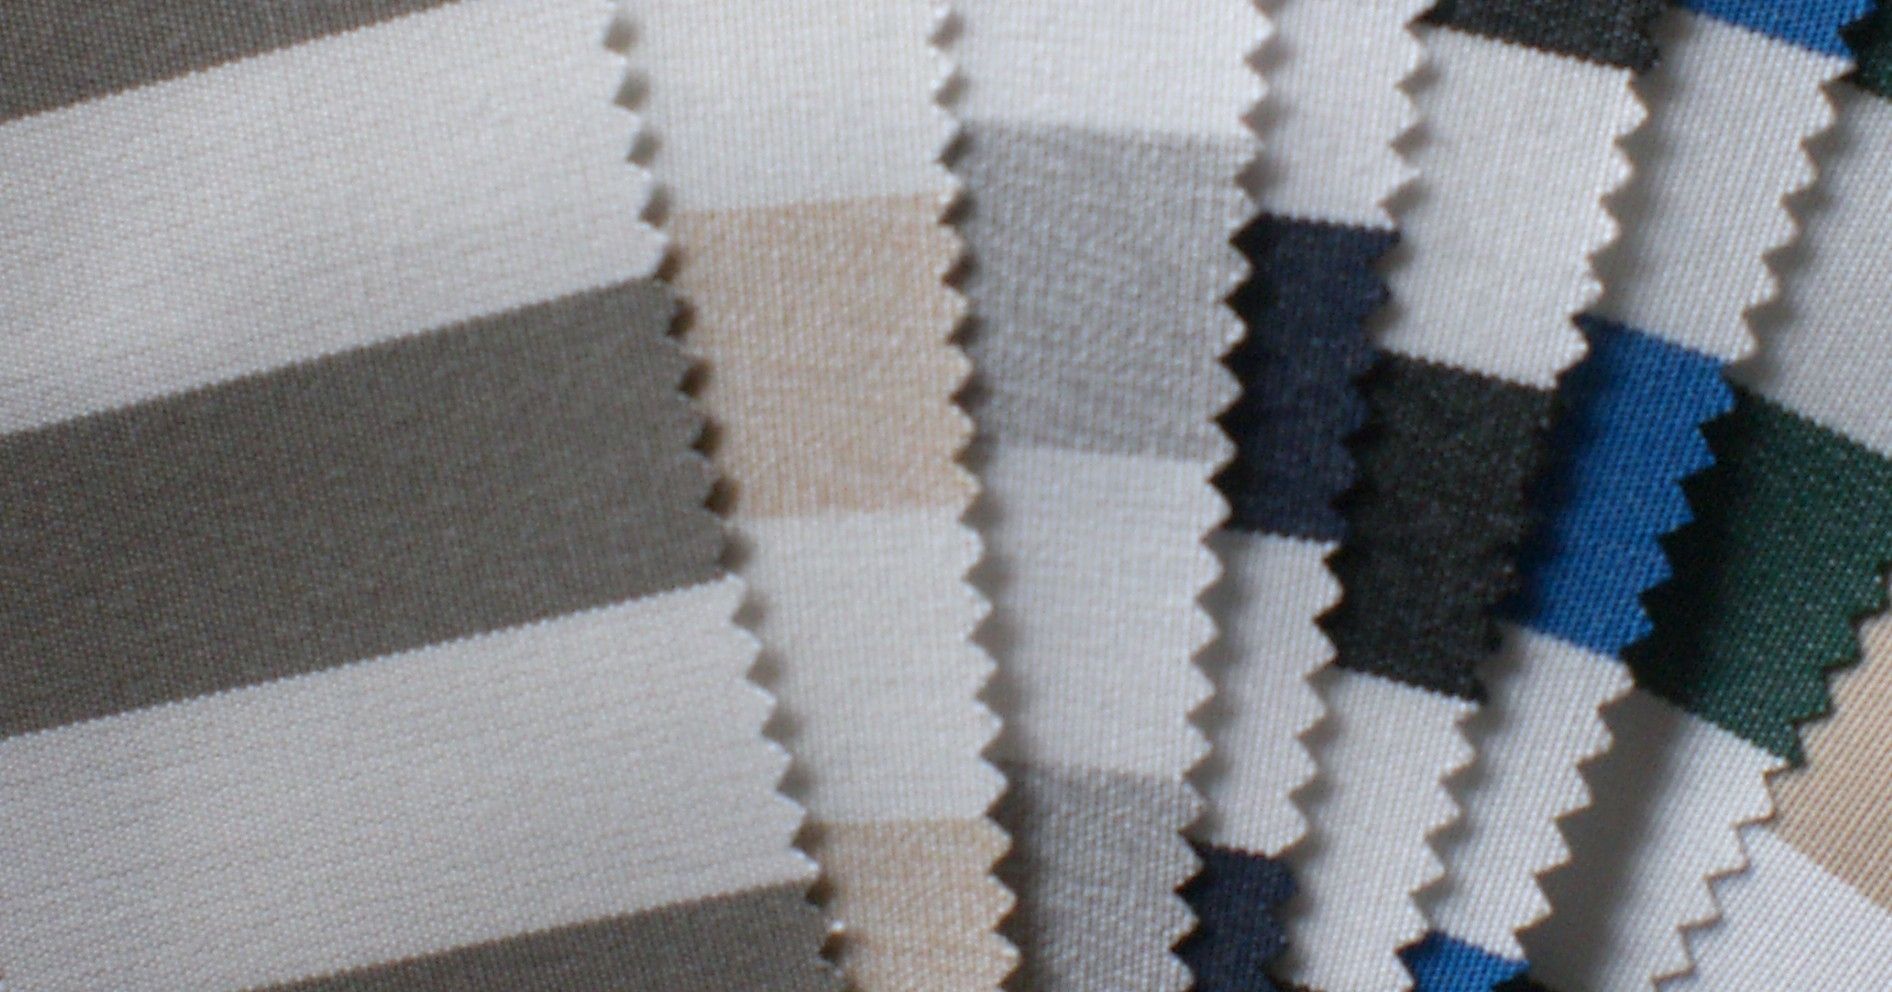 tapizar un sofa de palets uno mismo,telas naúticas